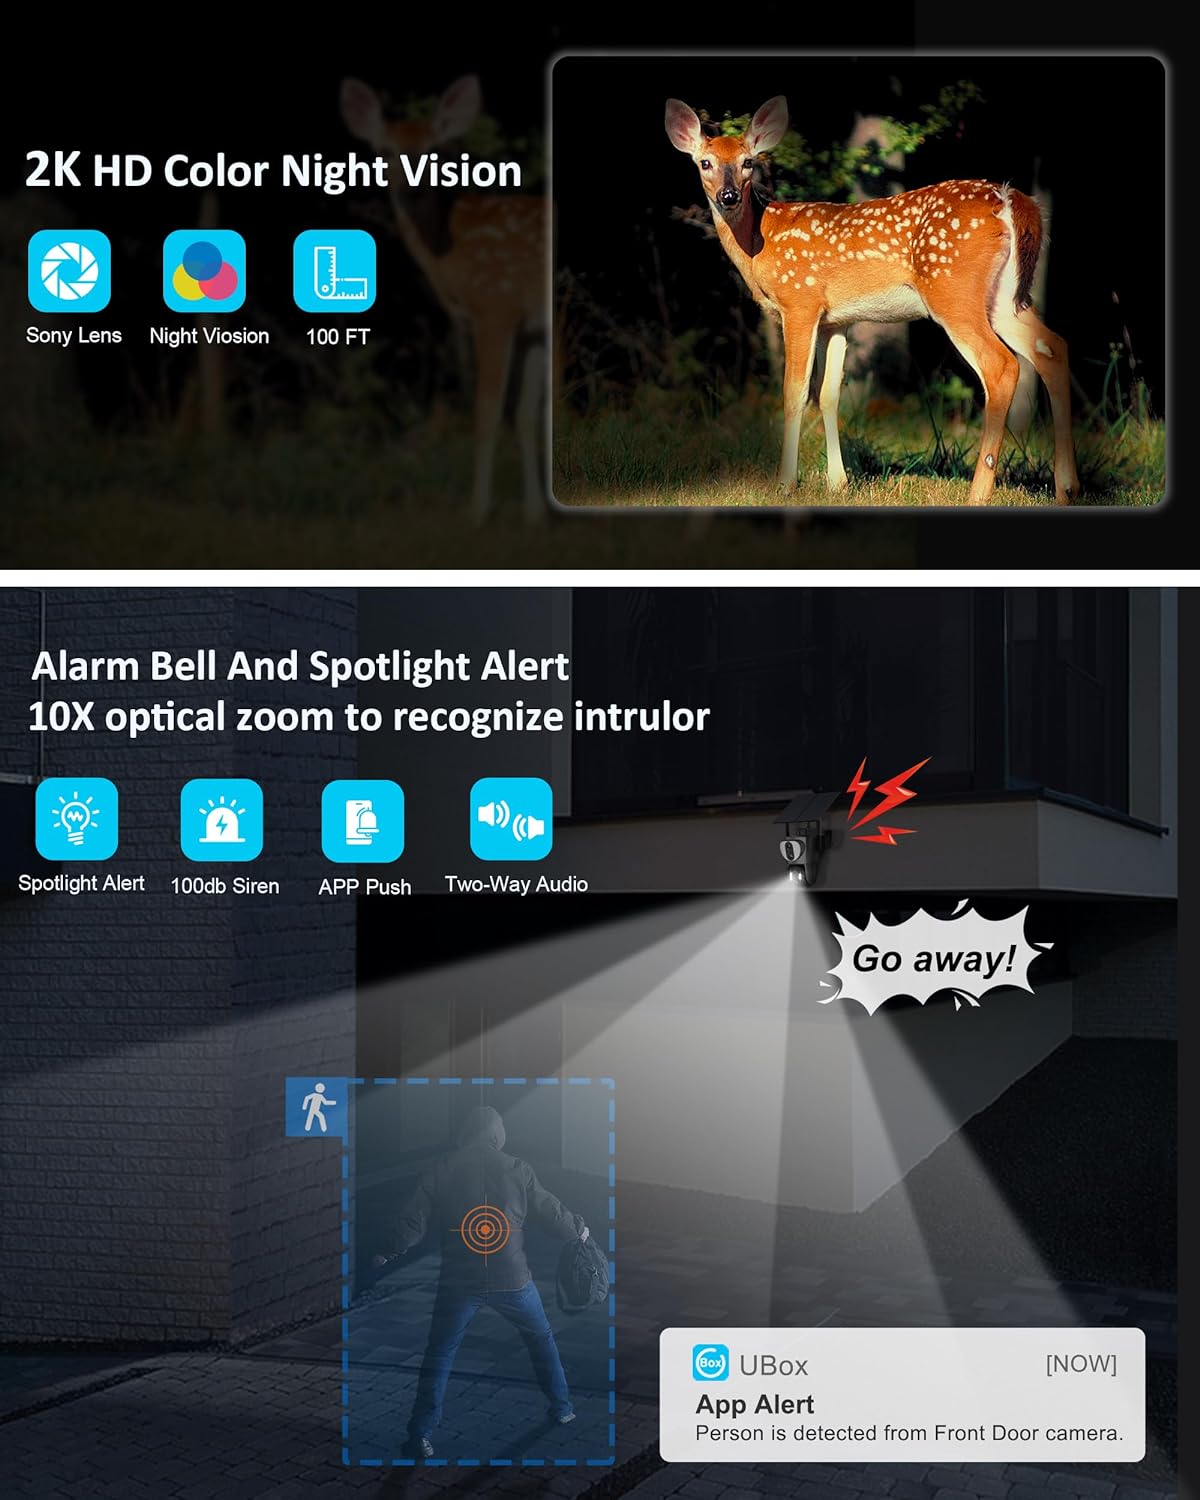 2K HD color night vision 